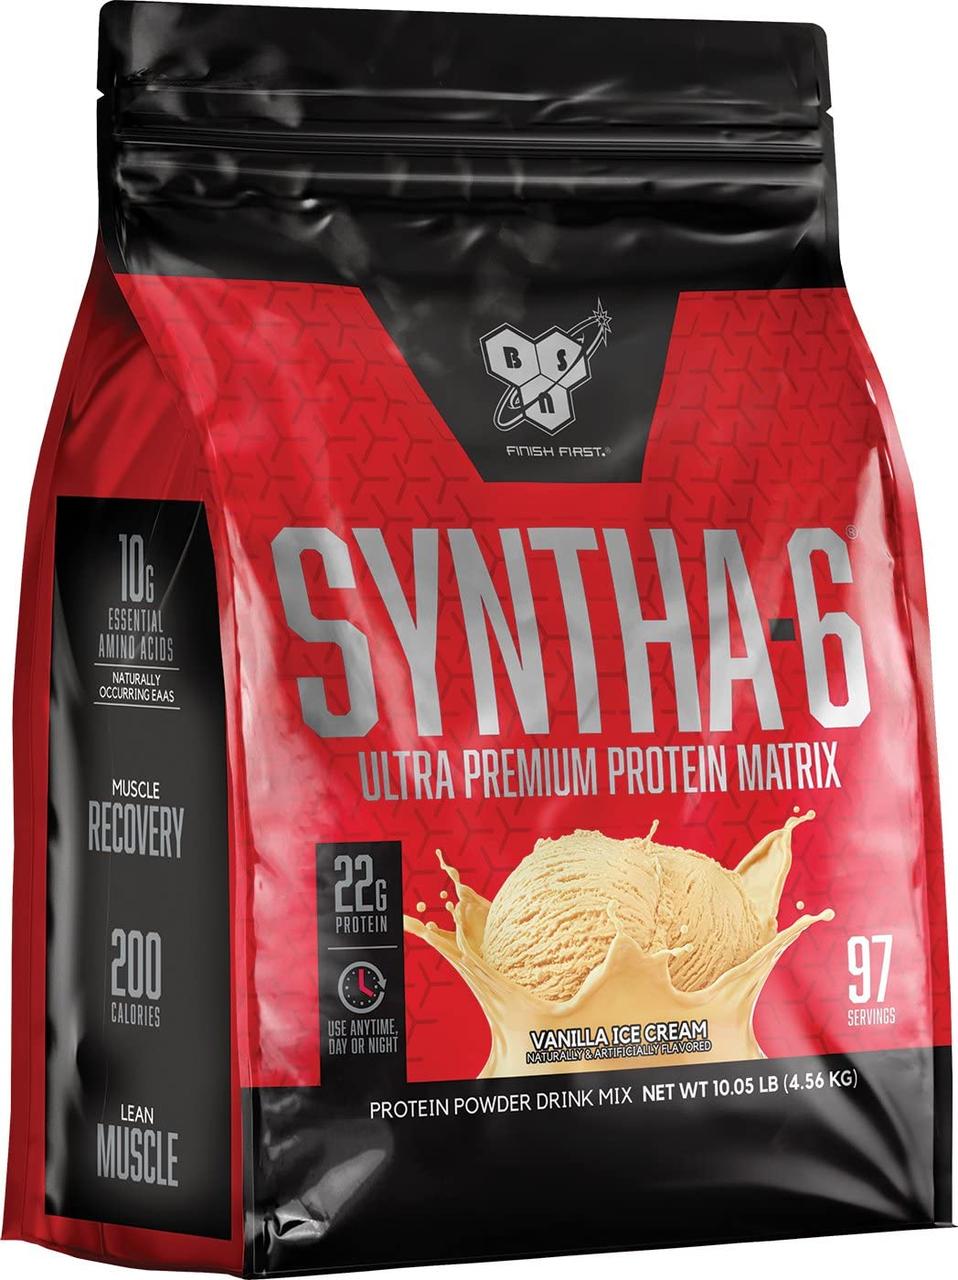 Комплексный протеин BSN Syntha-6 (4,56 кг) бсн синта 6 ваниль,  мл, BSN. Комплексный протеин. 